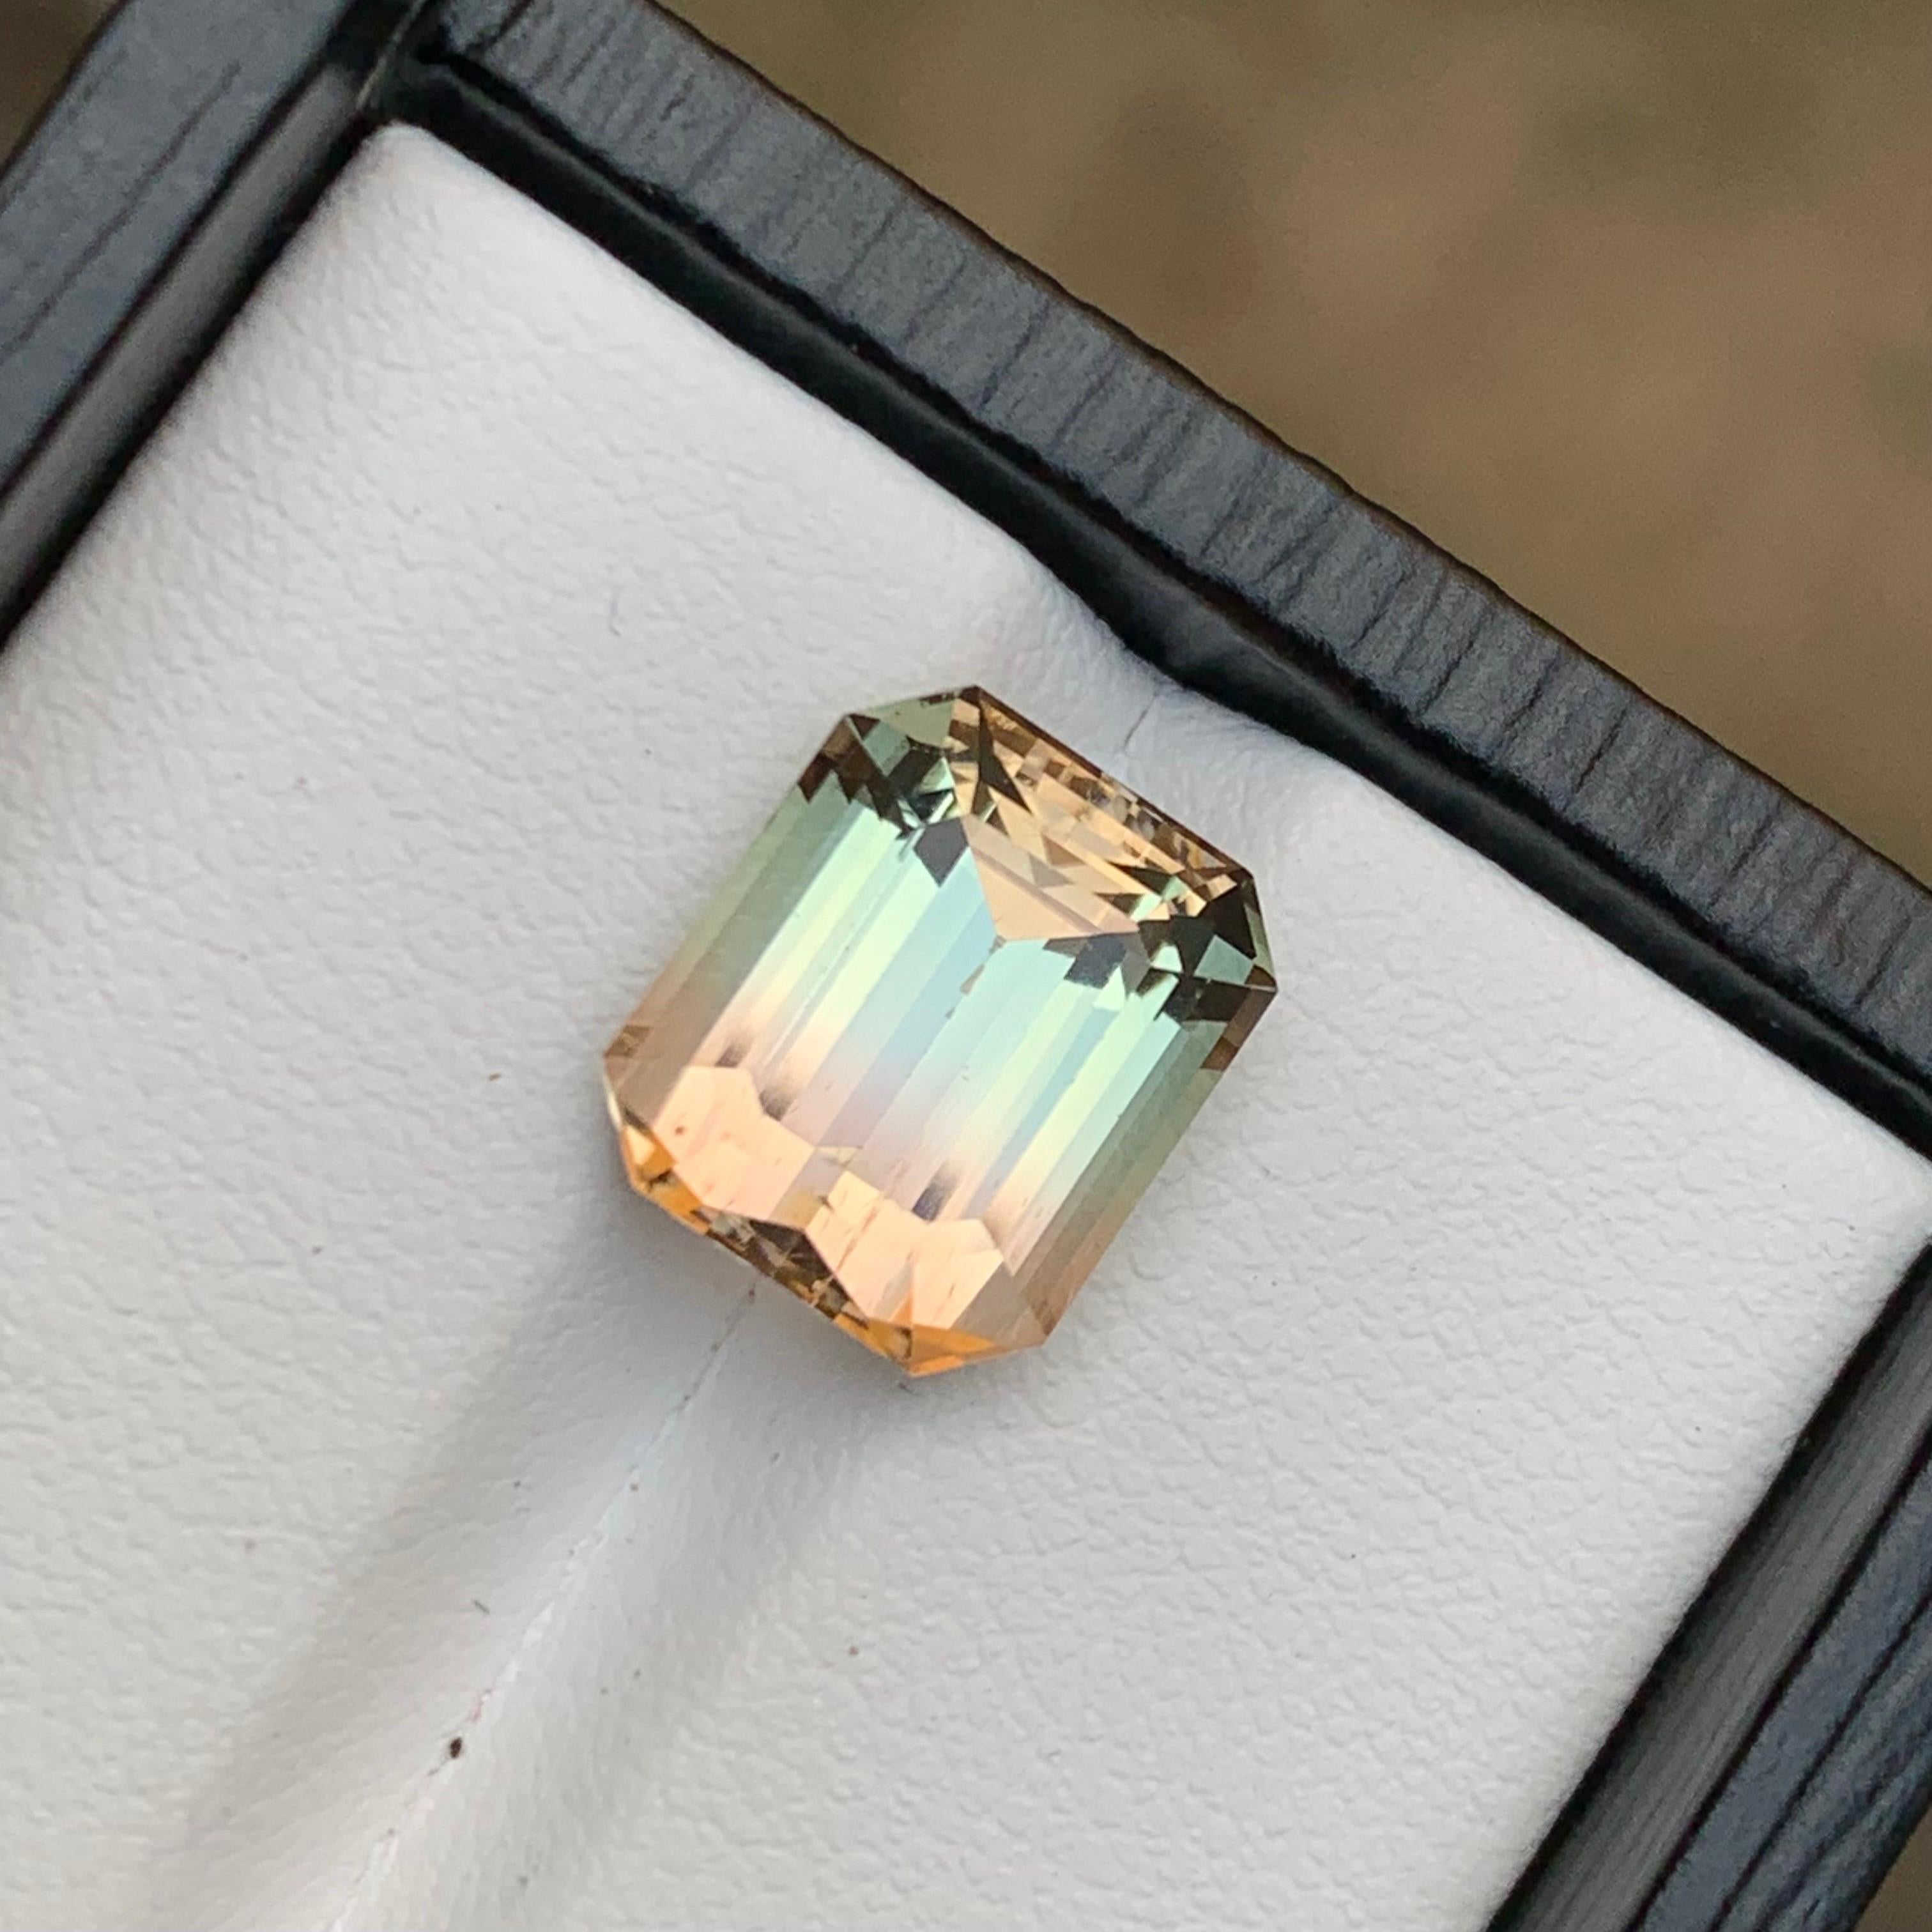 Rare Bicolor Natural Tourmaline Loose Gemstone, 5.80 Carat-Emerald/Octagon Cut For Sale 2